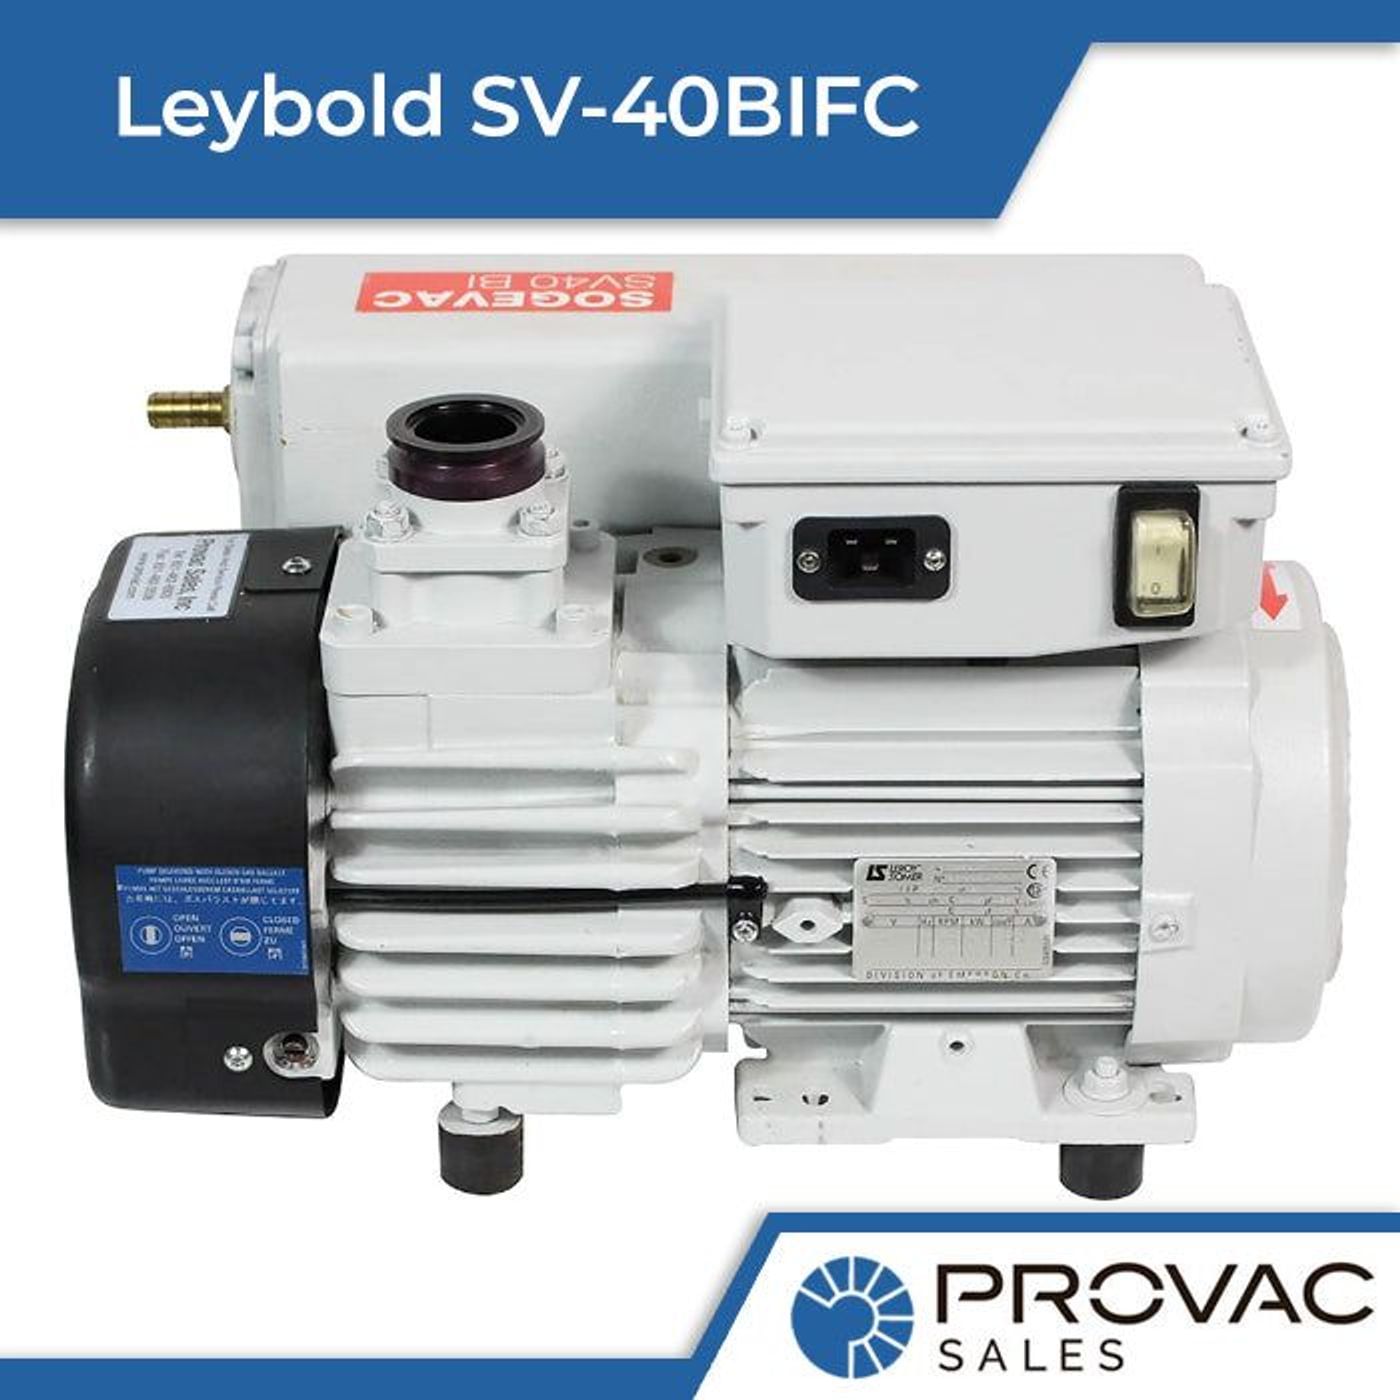 Leybold SV-40BIFC Vane Pump: In Stock, Ready To Ship